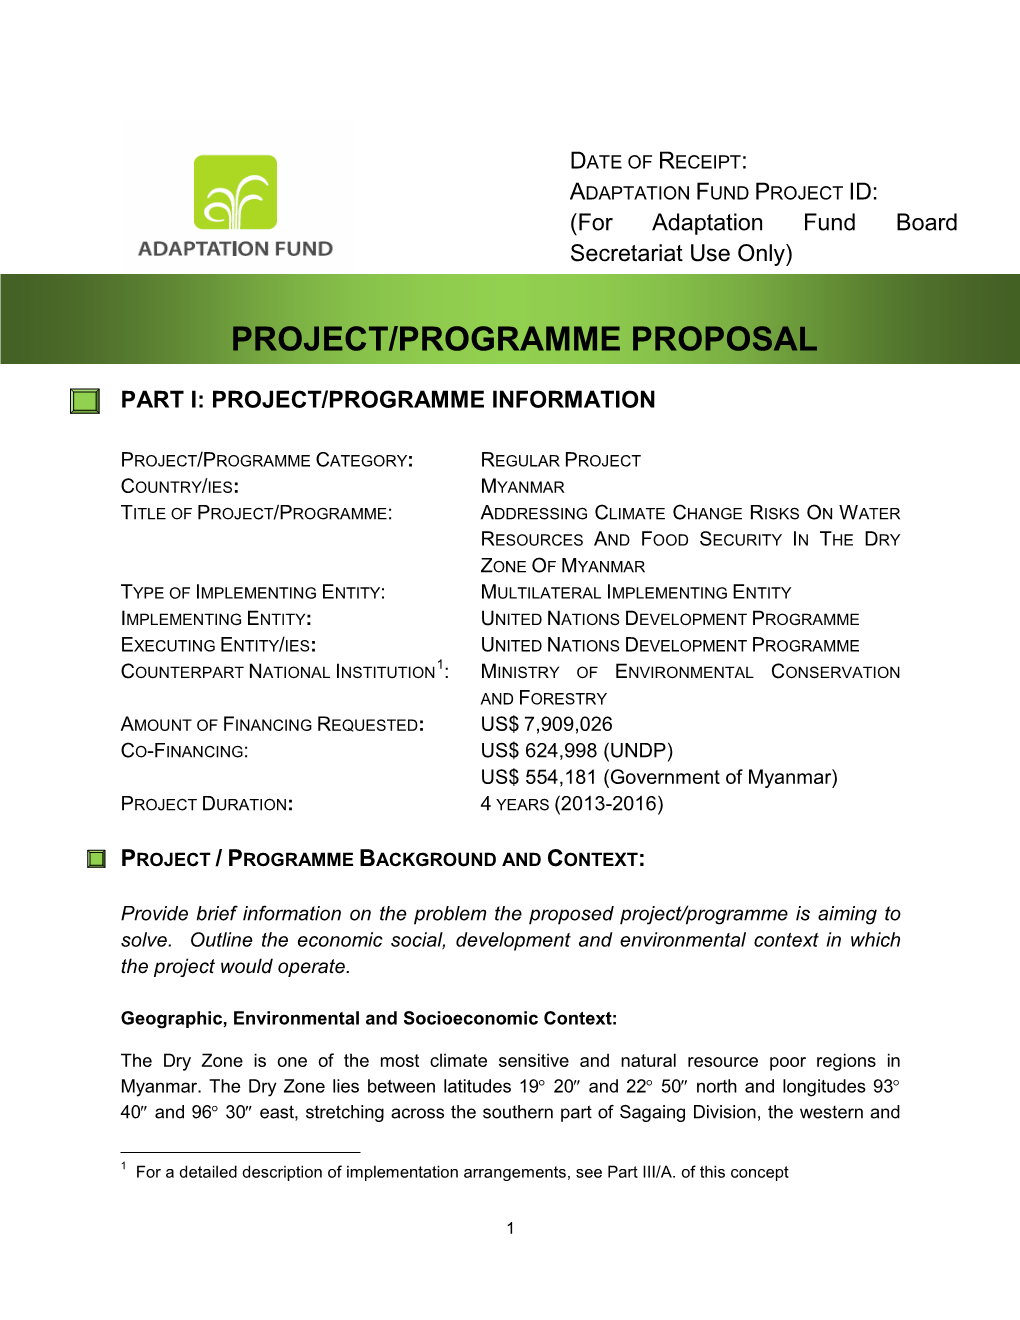 Project/Programme Proposal